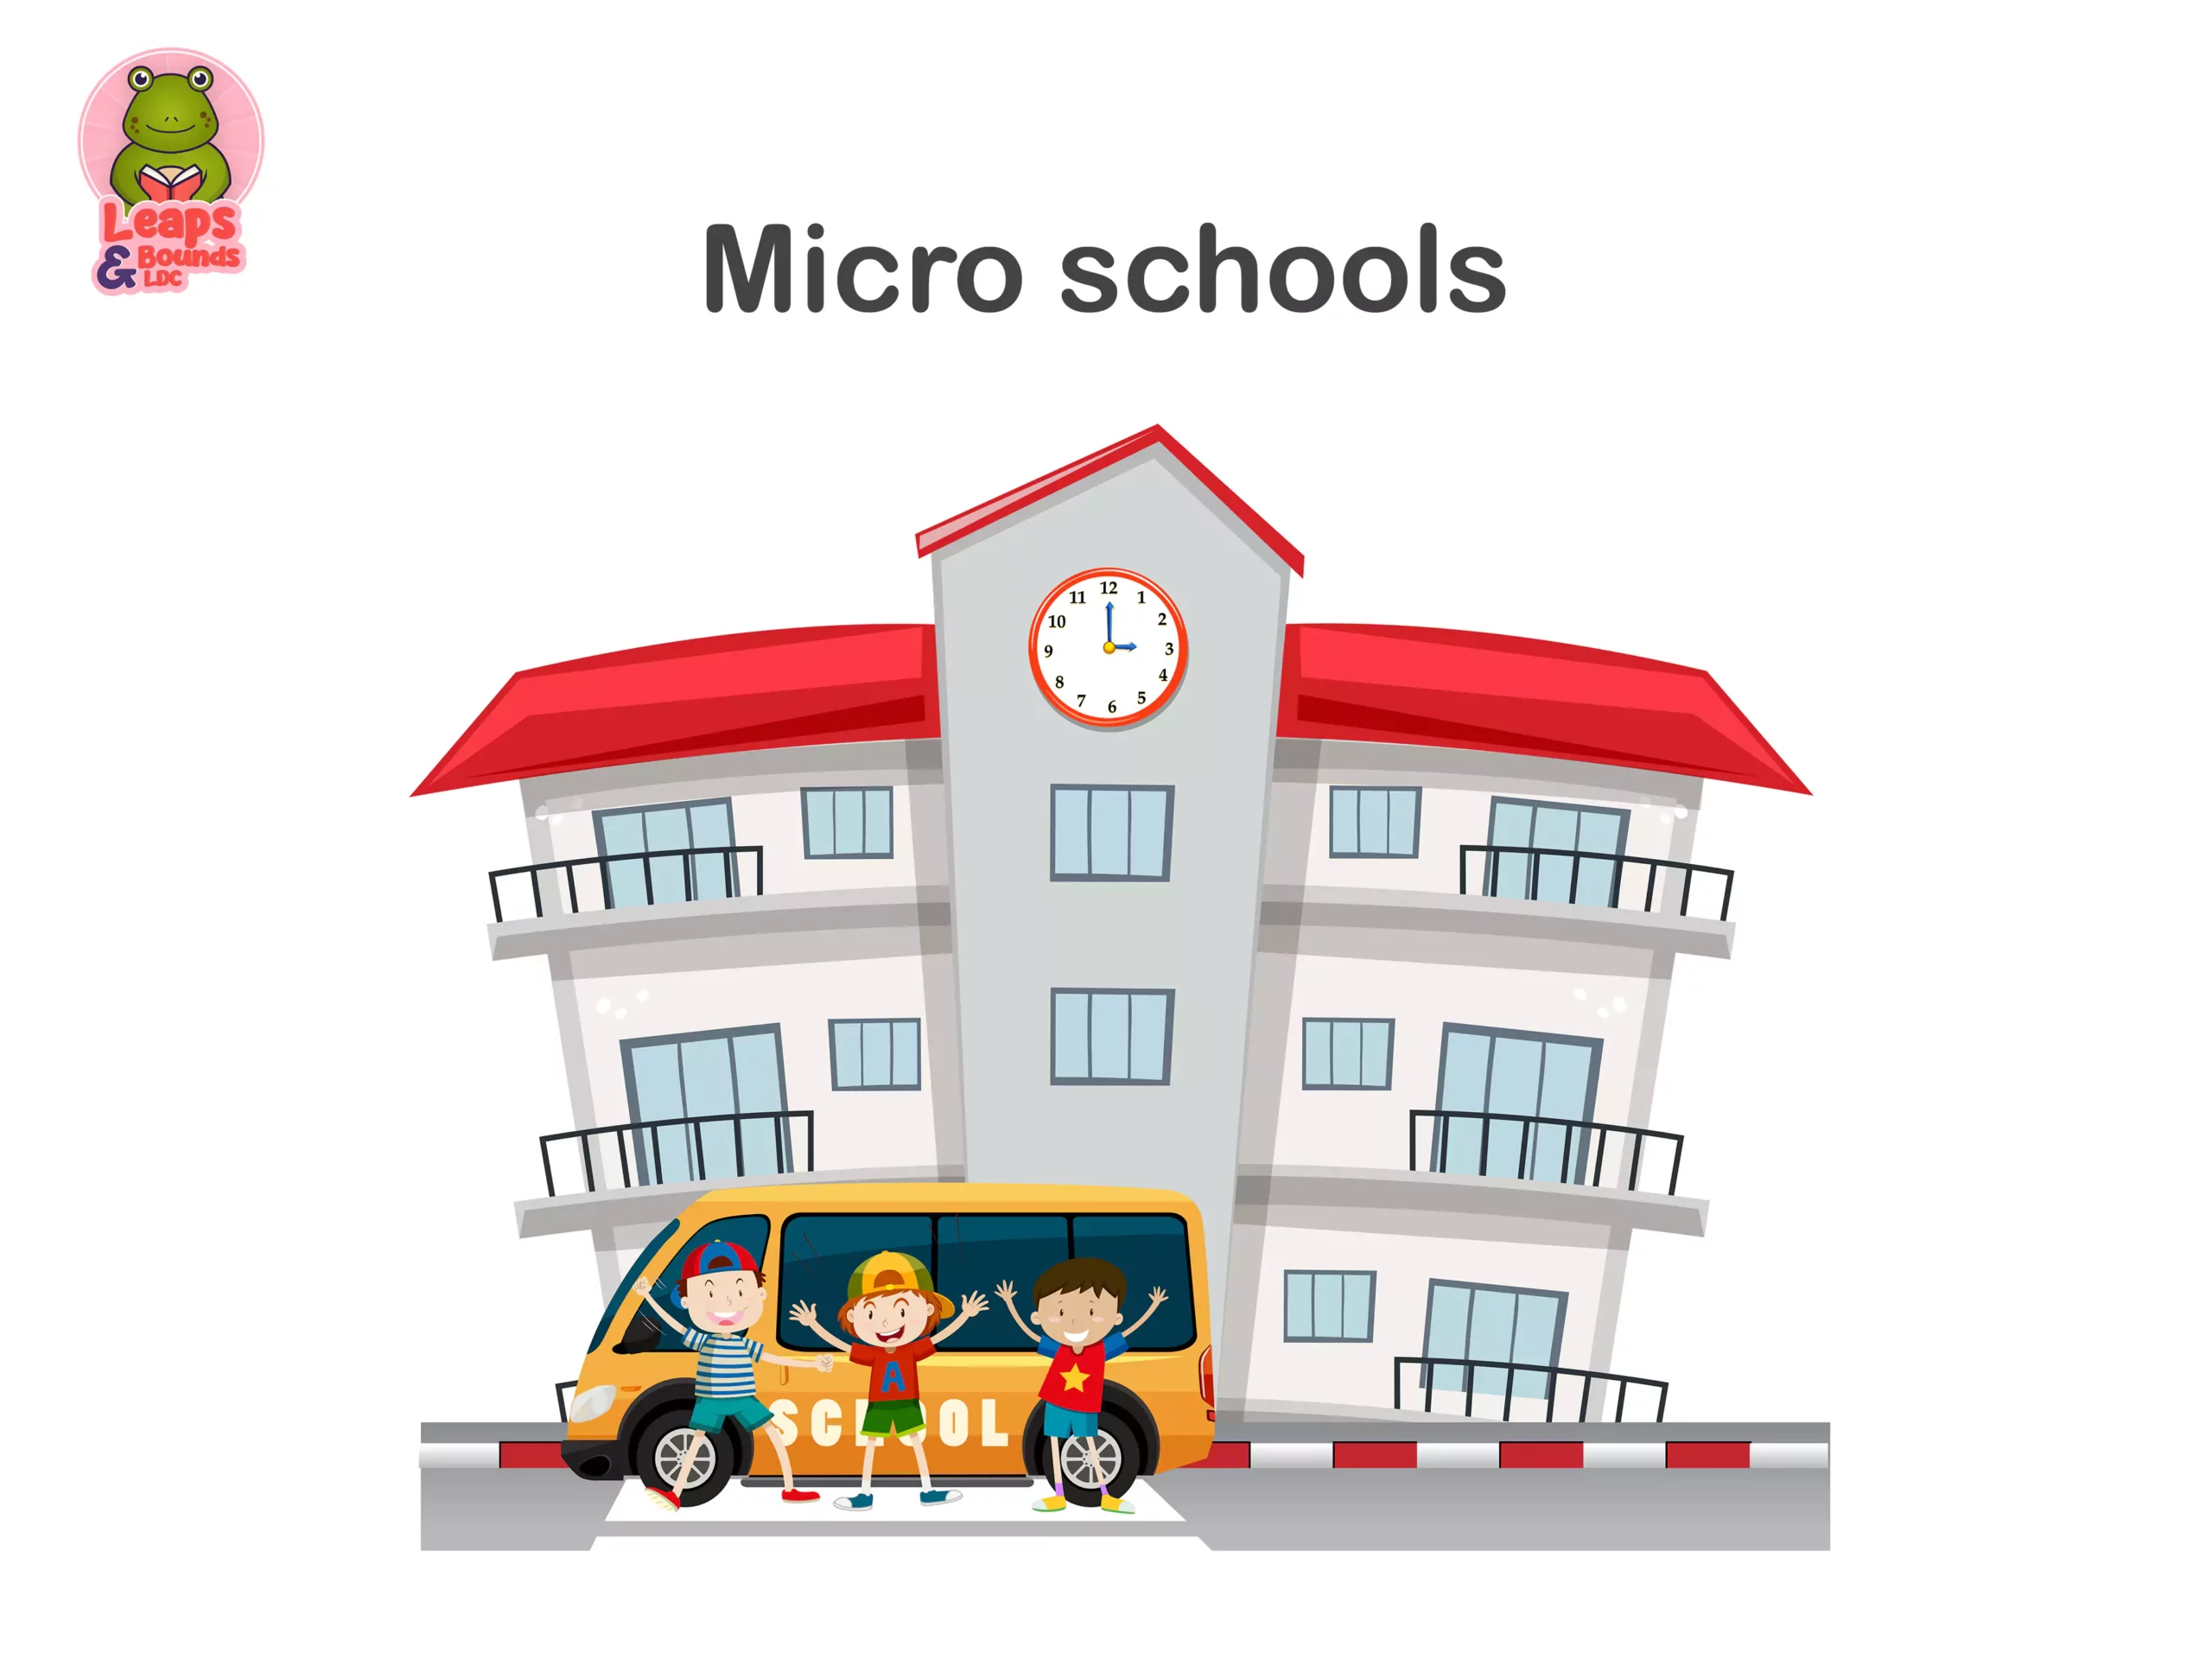 Micro schools